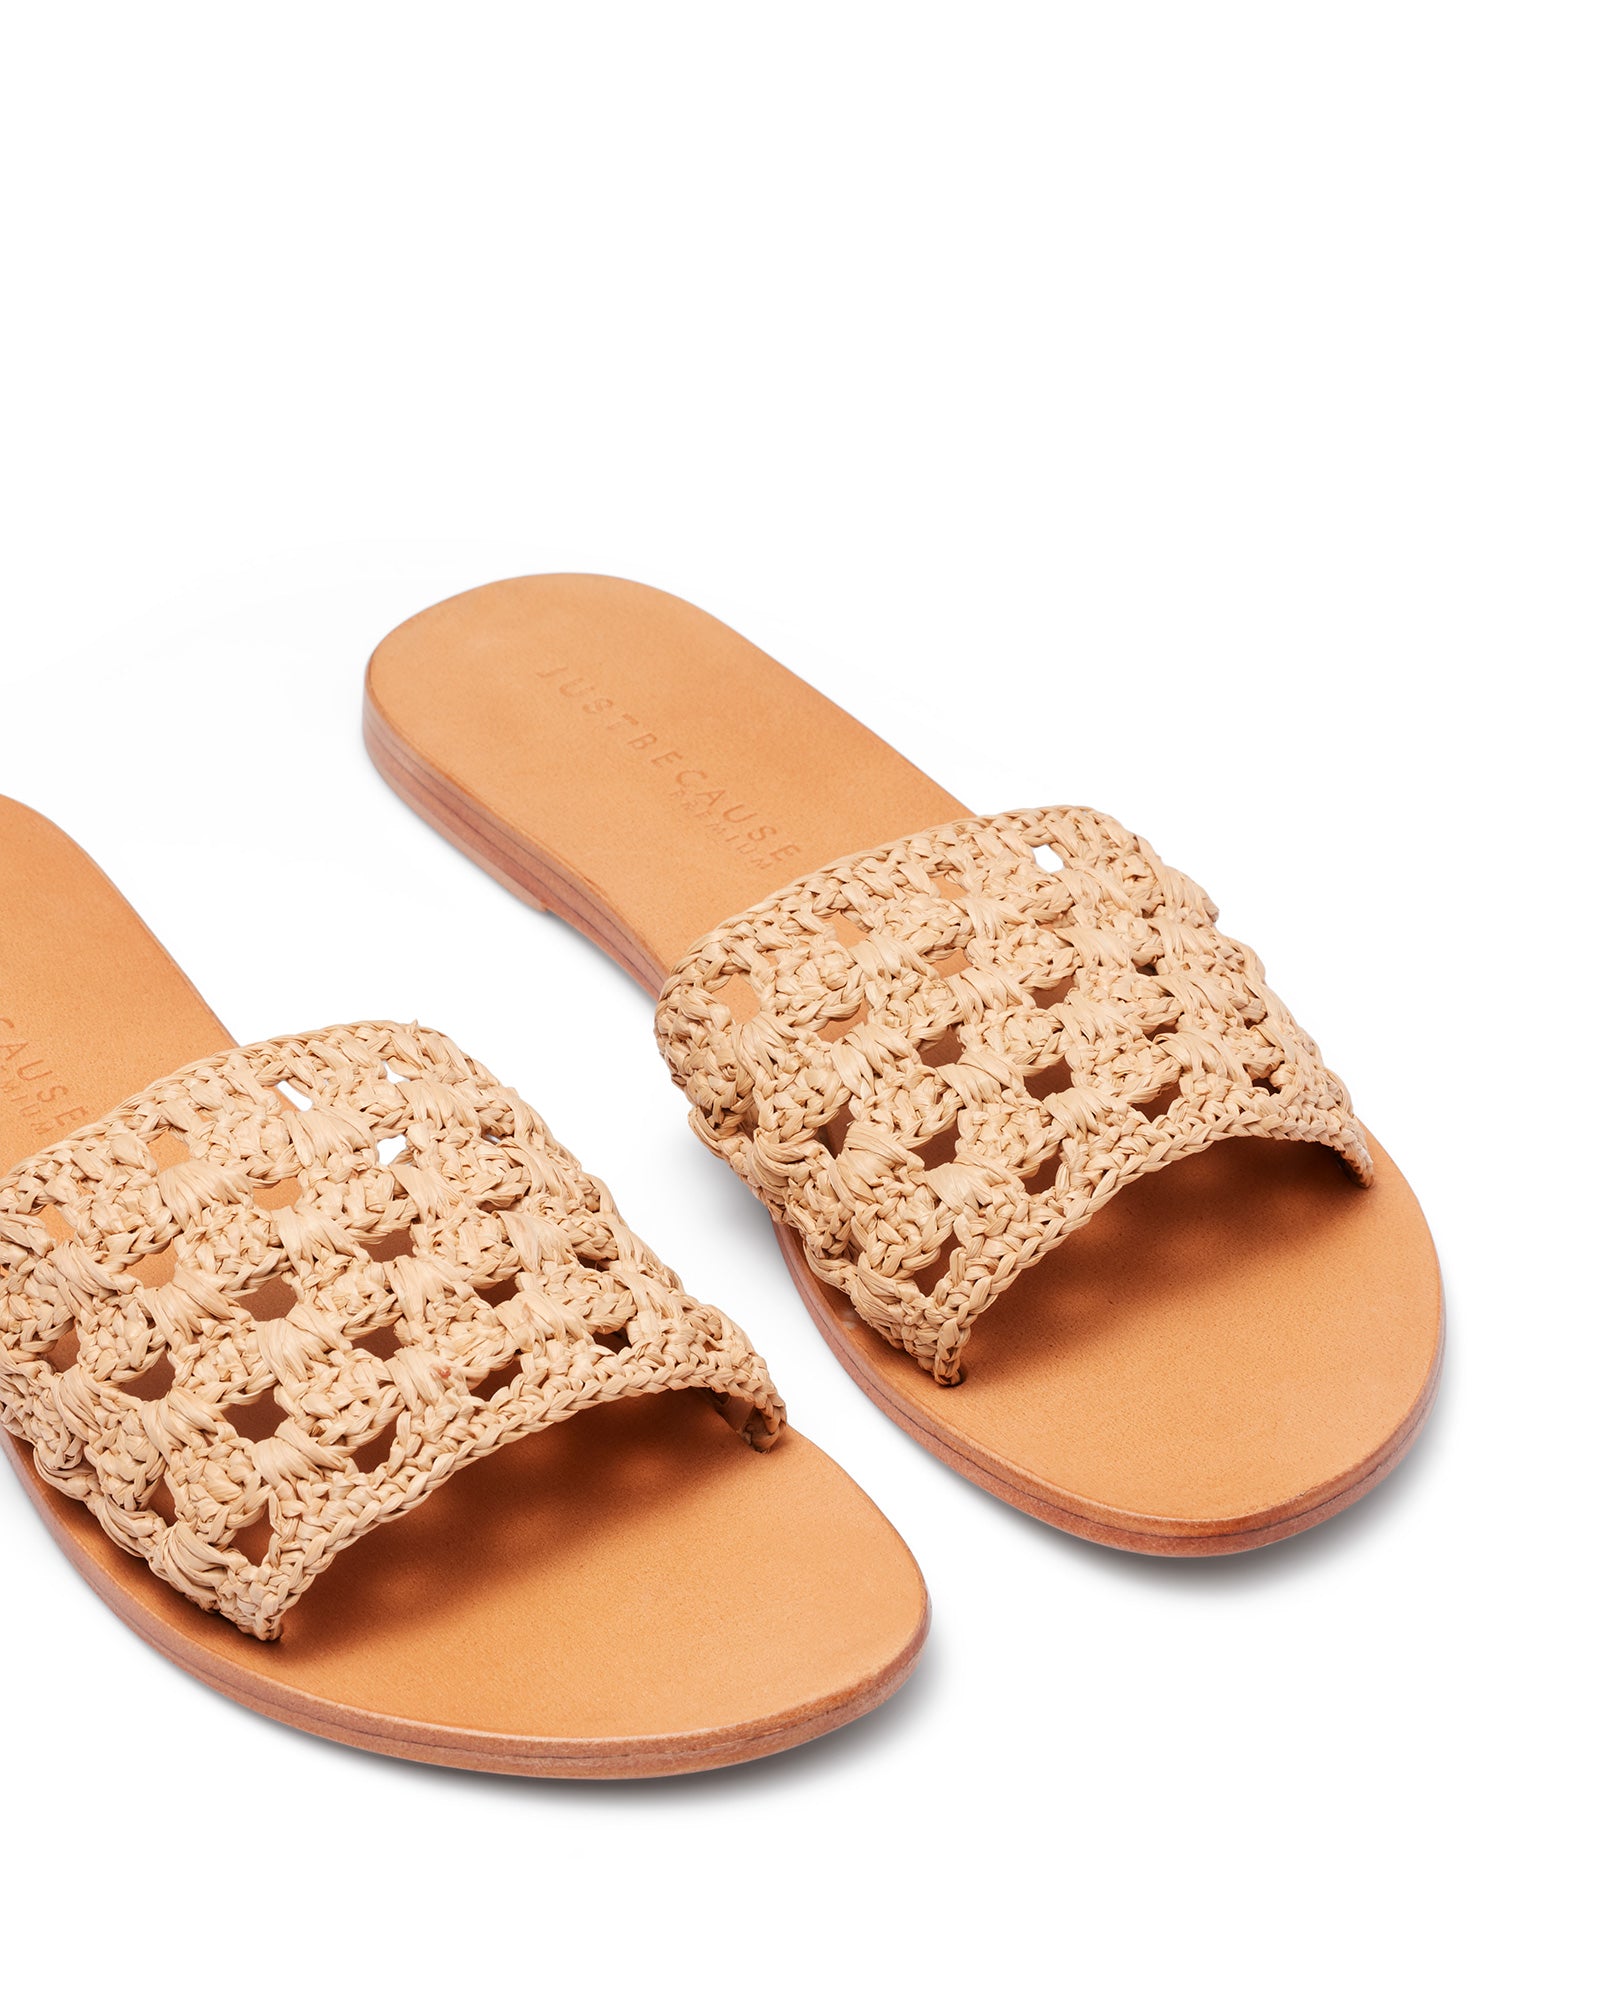 Just Because Shoes Atolls Natural | Sandals | Slides | Flats | Raffia